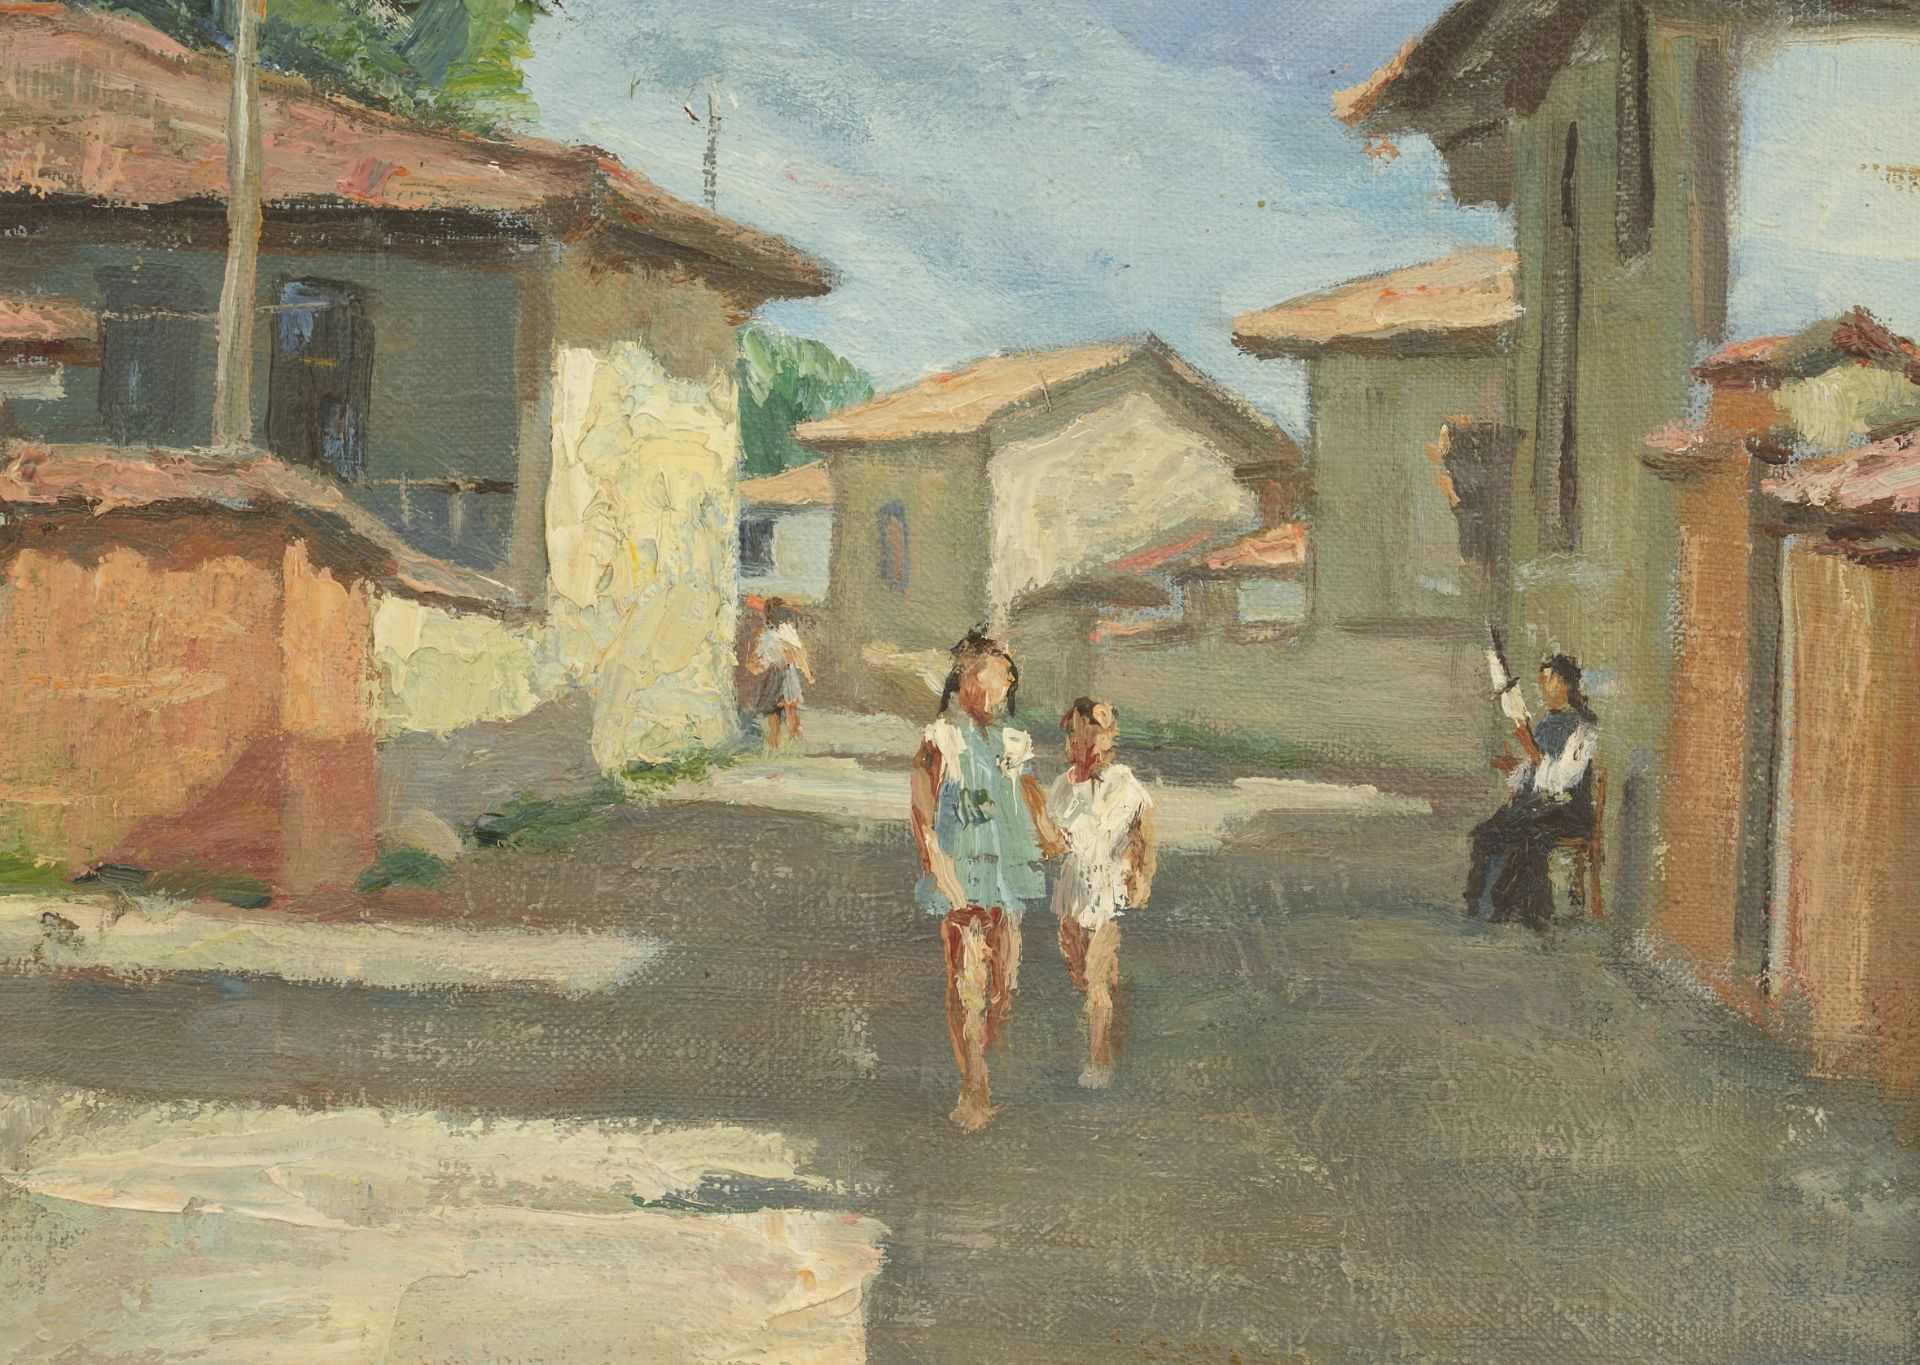 Hristo Ivanov Forev /1927-2005/  "Village Street - Kazanlushko" - Image 3 of 3